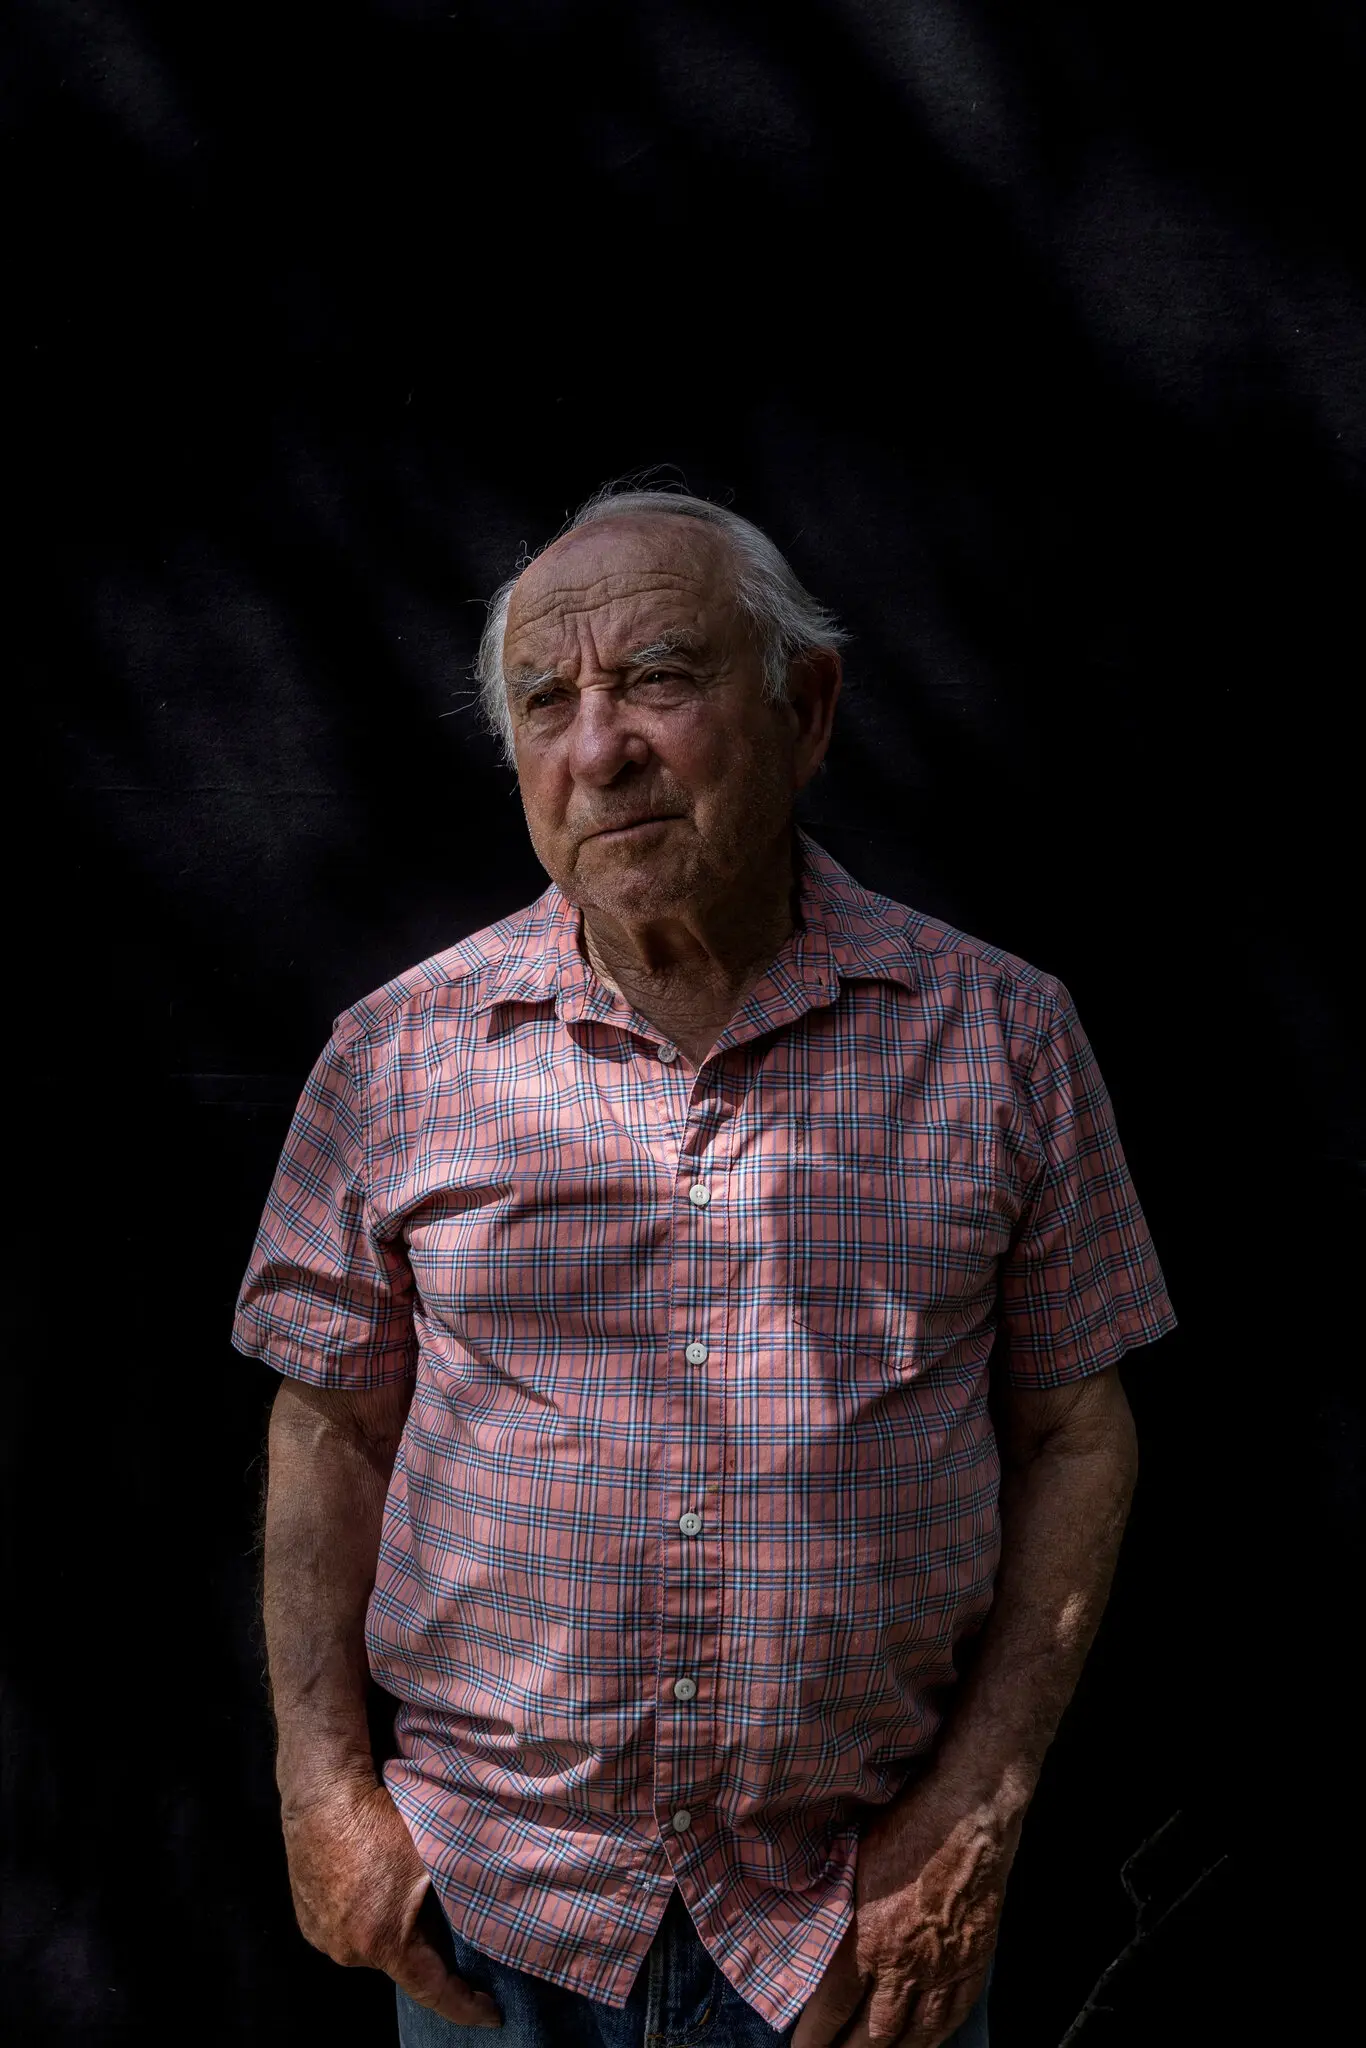 Івон Шуїнар (Yvon Chouinard) - засновник компанії "Patagonia". Фото Natalie Behring для The New York Times